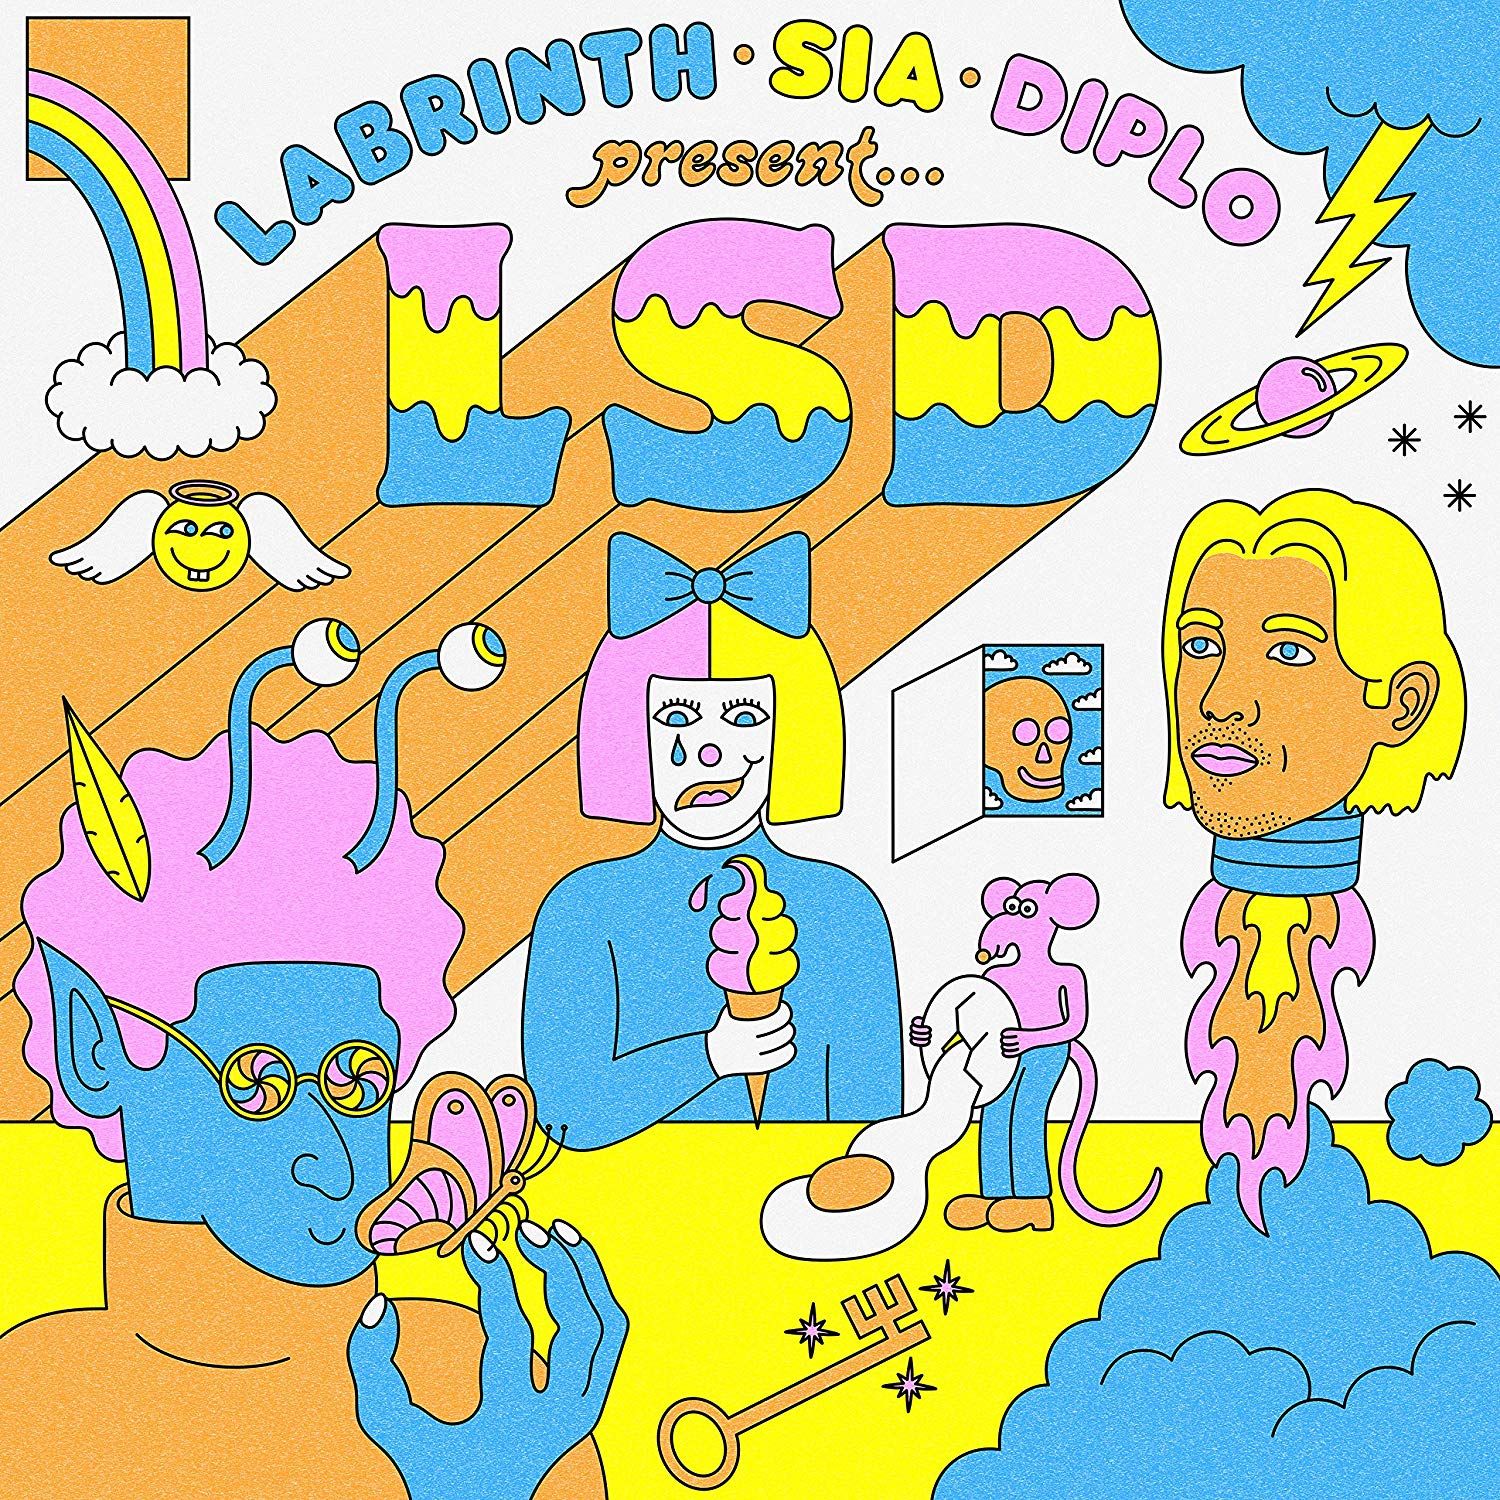 LSD - Labrinth, Sia, Diplo Present LSD